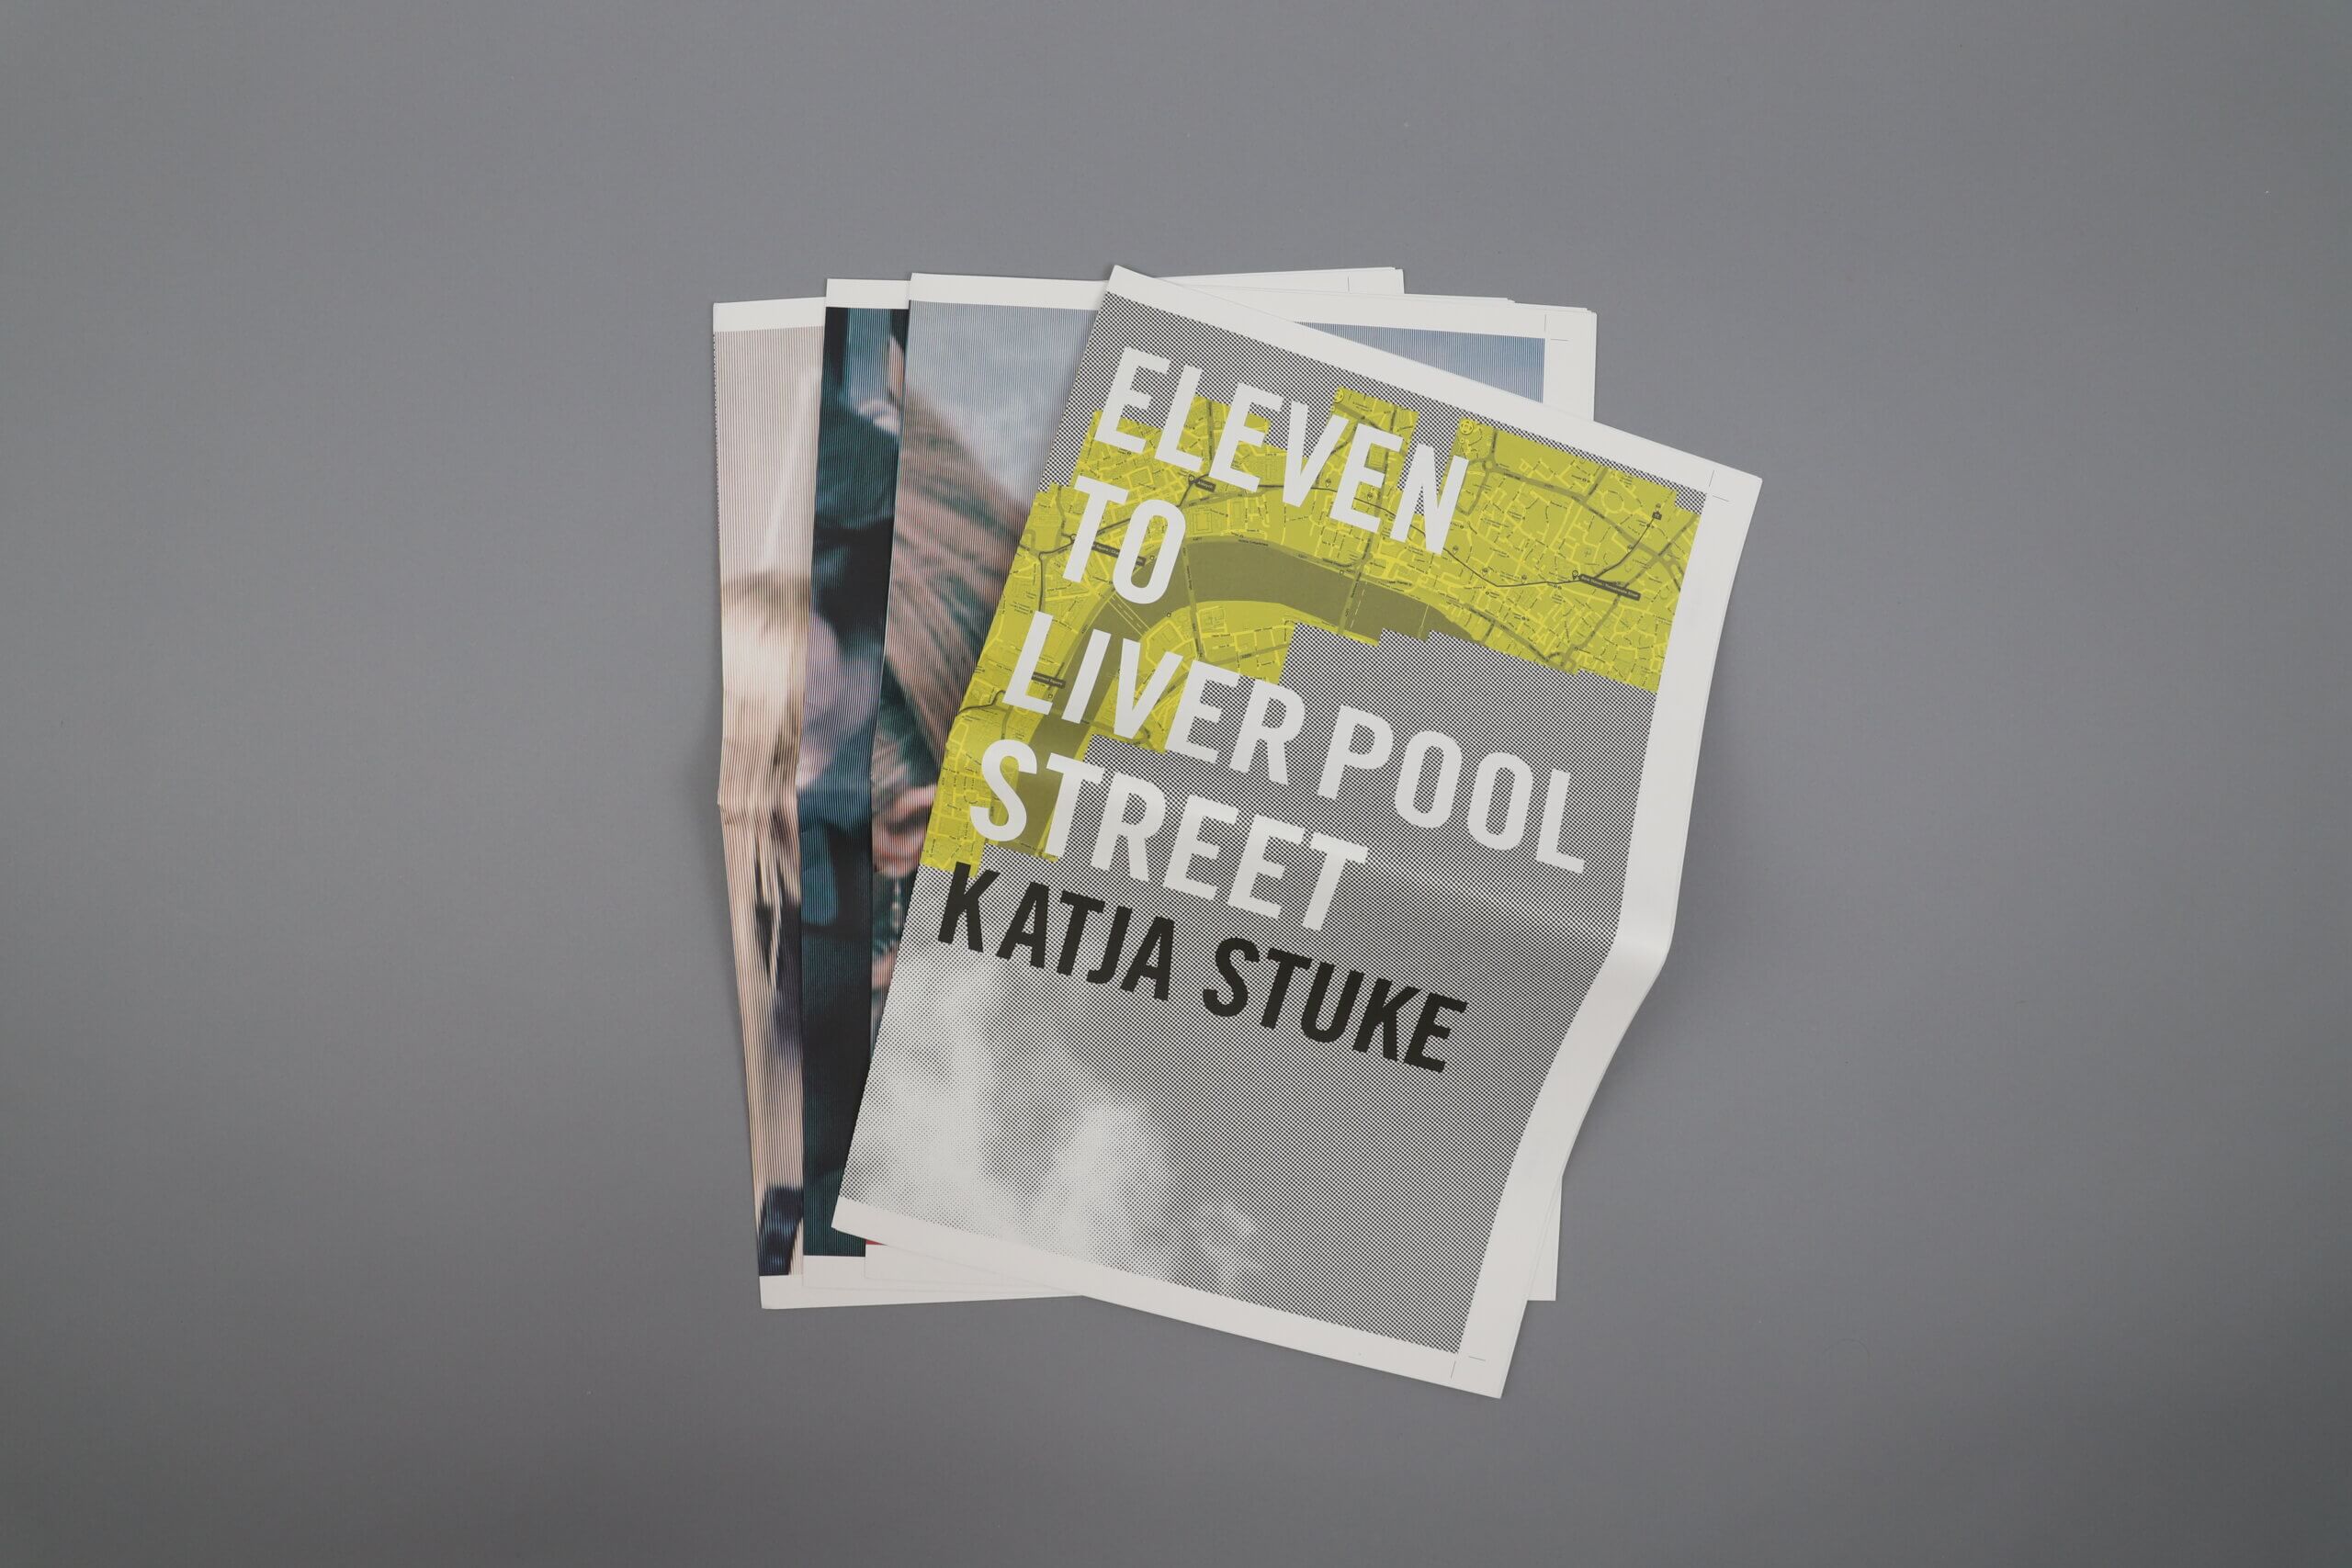 Eleven-to-Liverpool-Street-Katja-Stuke-visuel-1